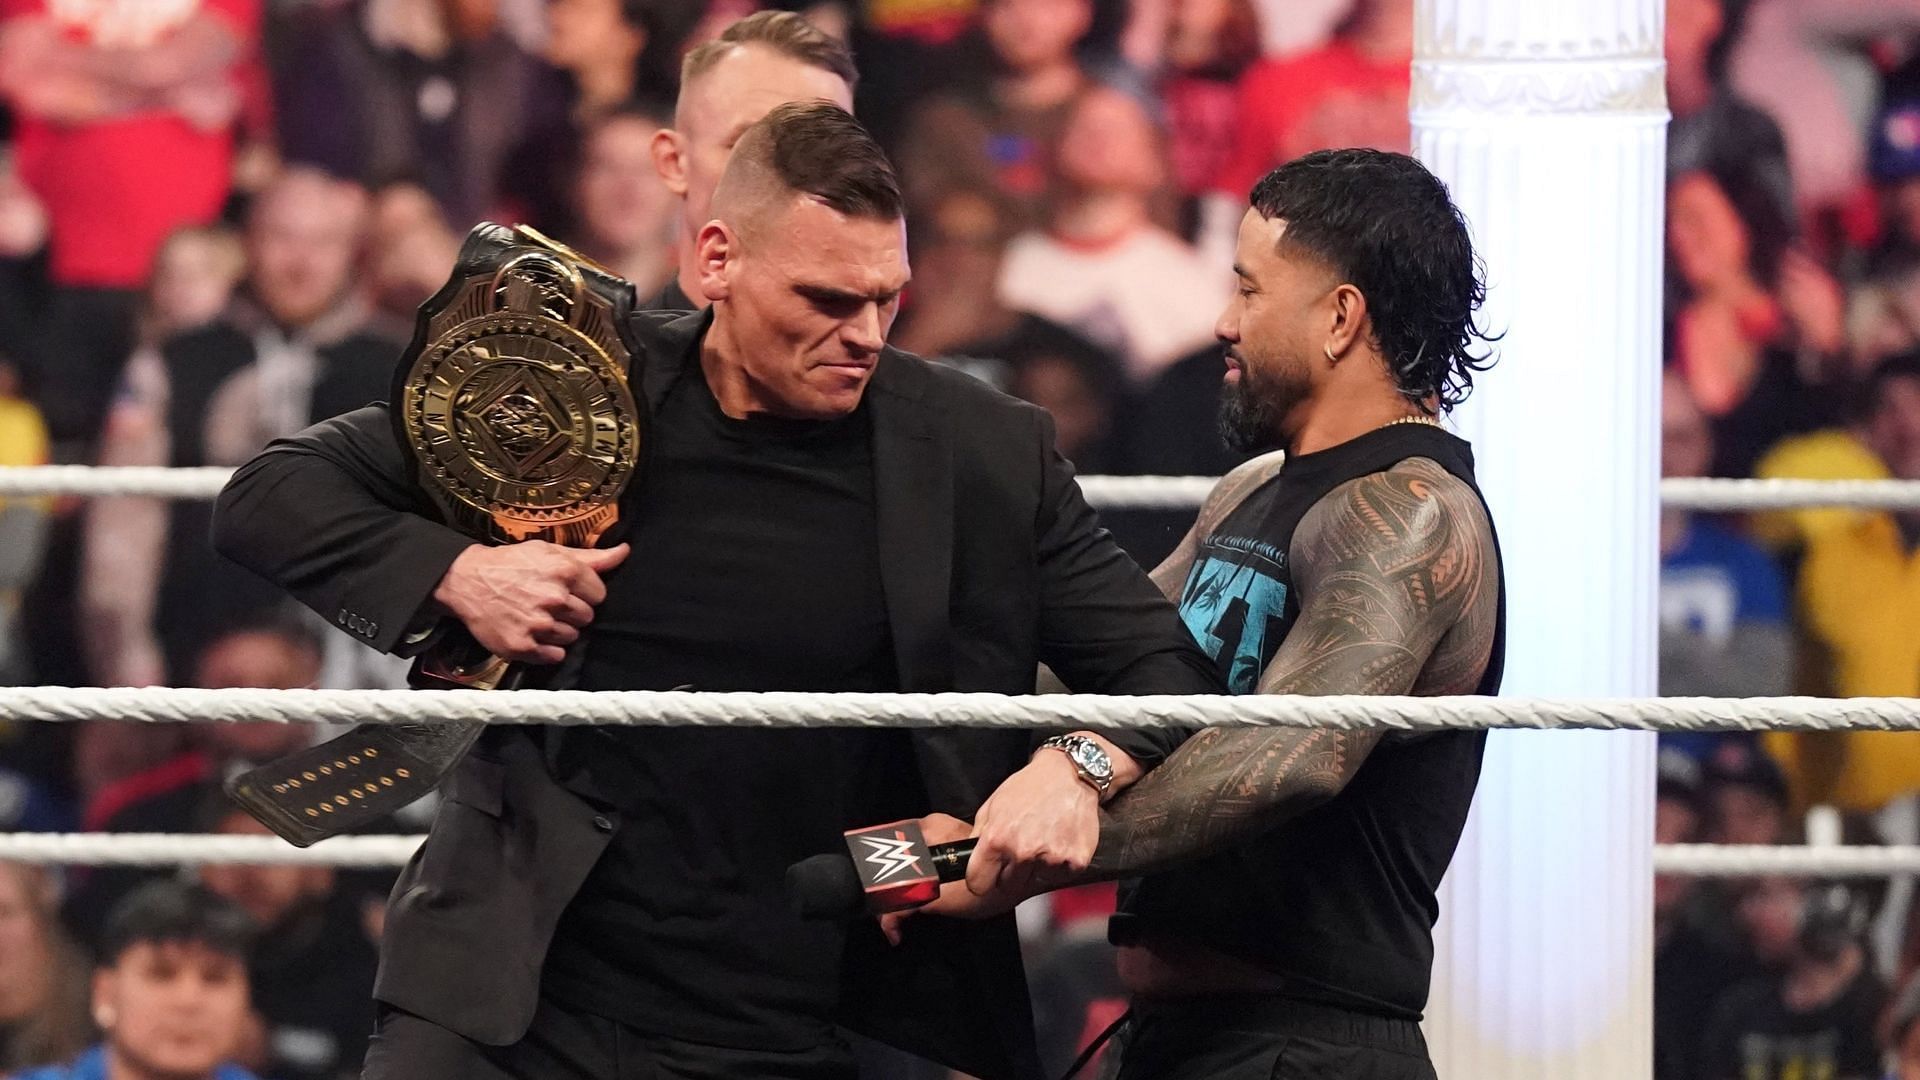 GUNTHER and Jey Uso struggle on WWE RAW